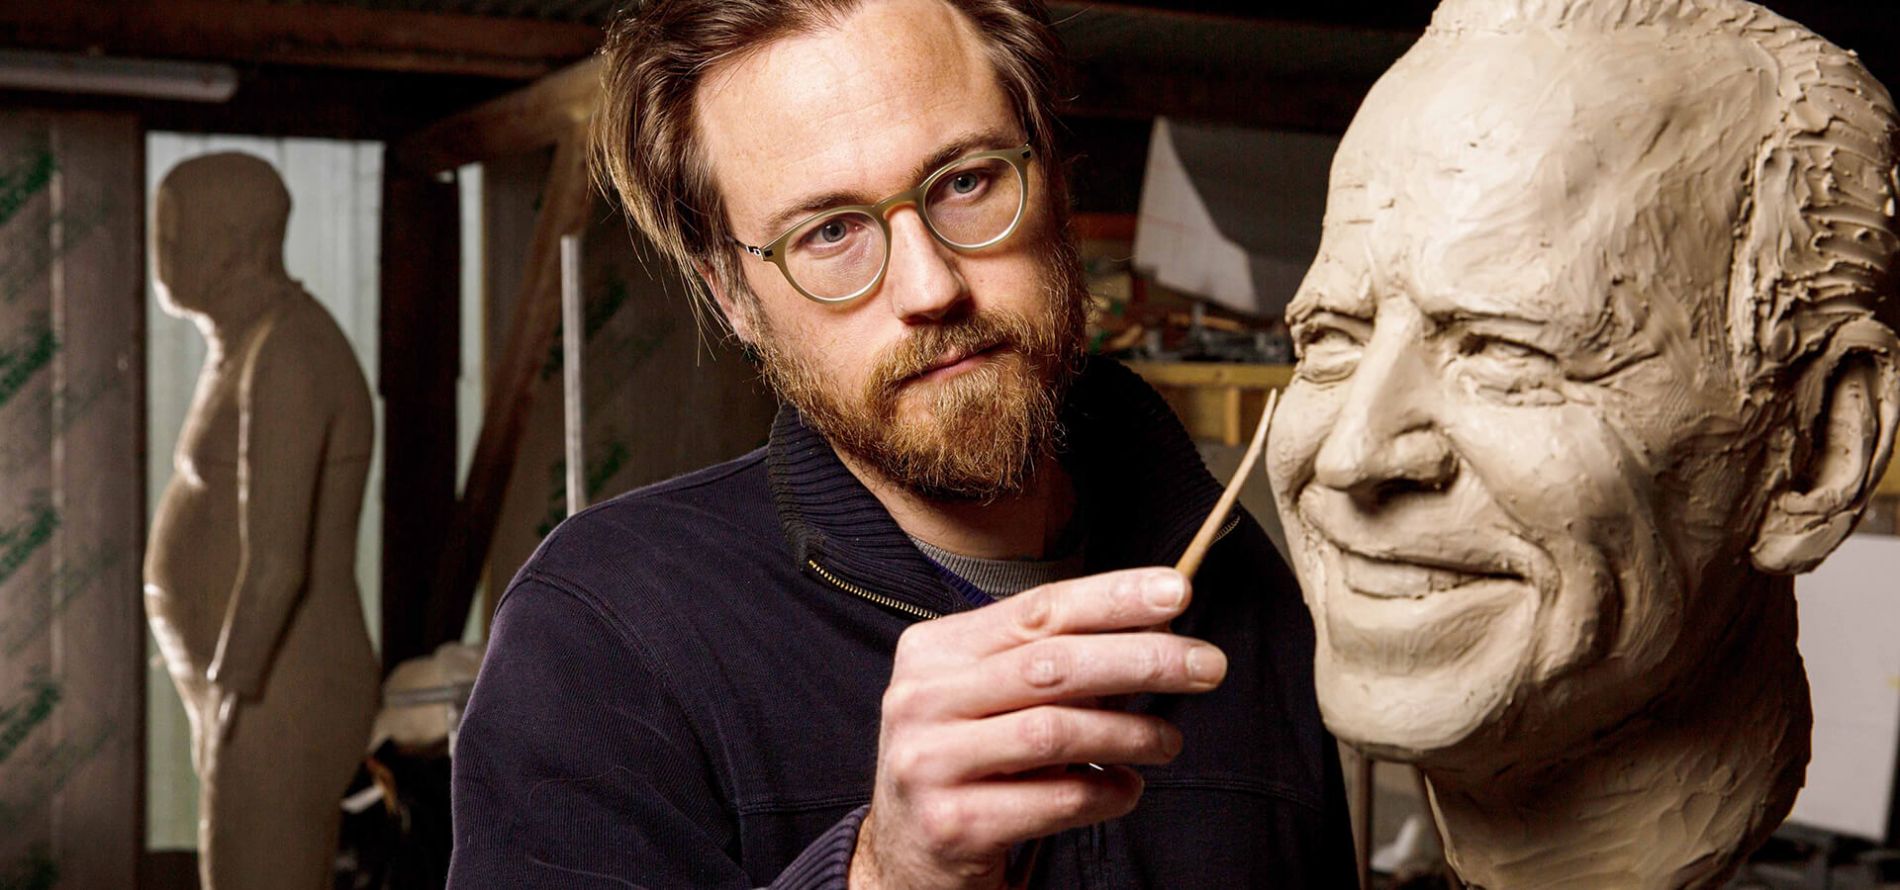 Artist nearing completion of the clay sculpture of Joe Biden's head.